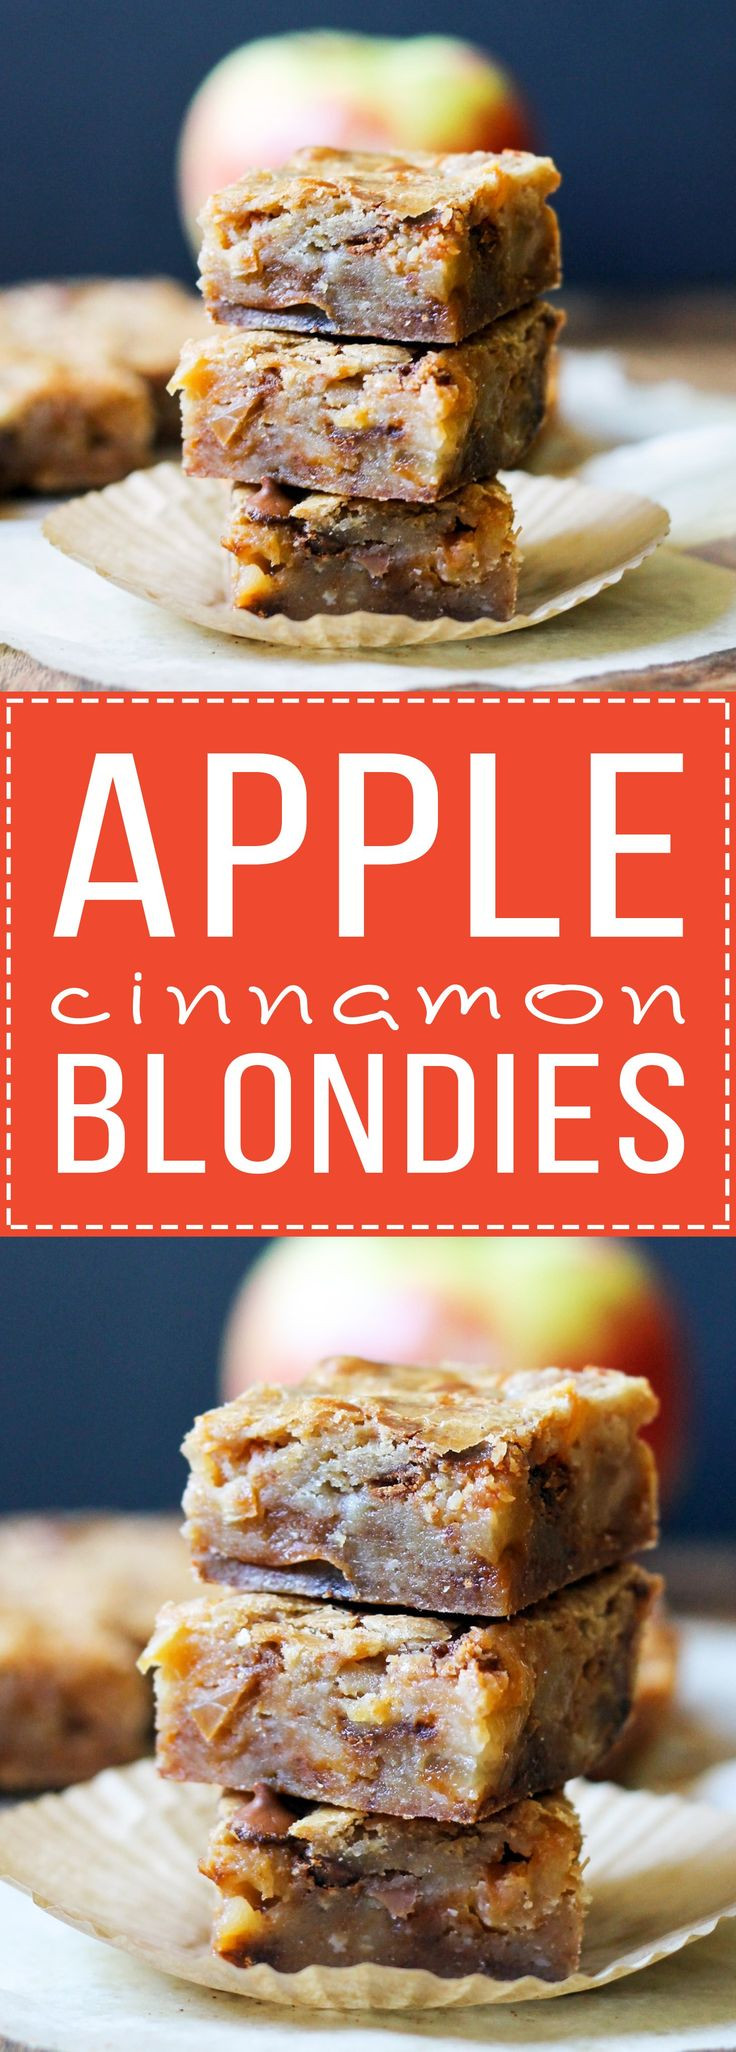 Apple Recipes For Fall
 Best 25 Apple desserts ideas on Pinterest